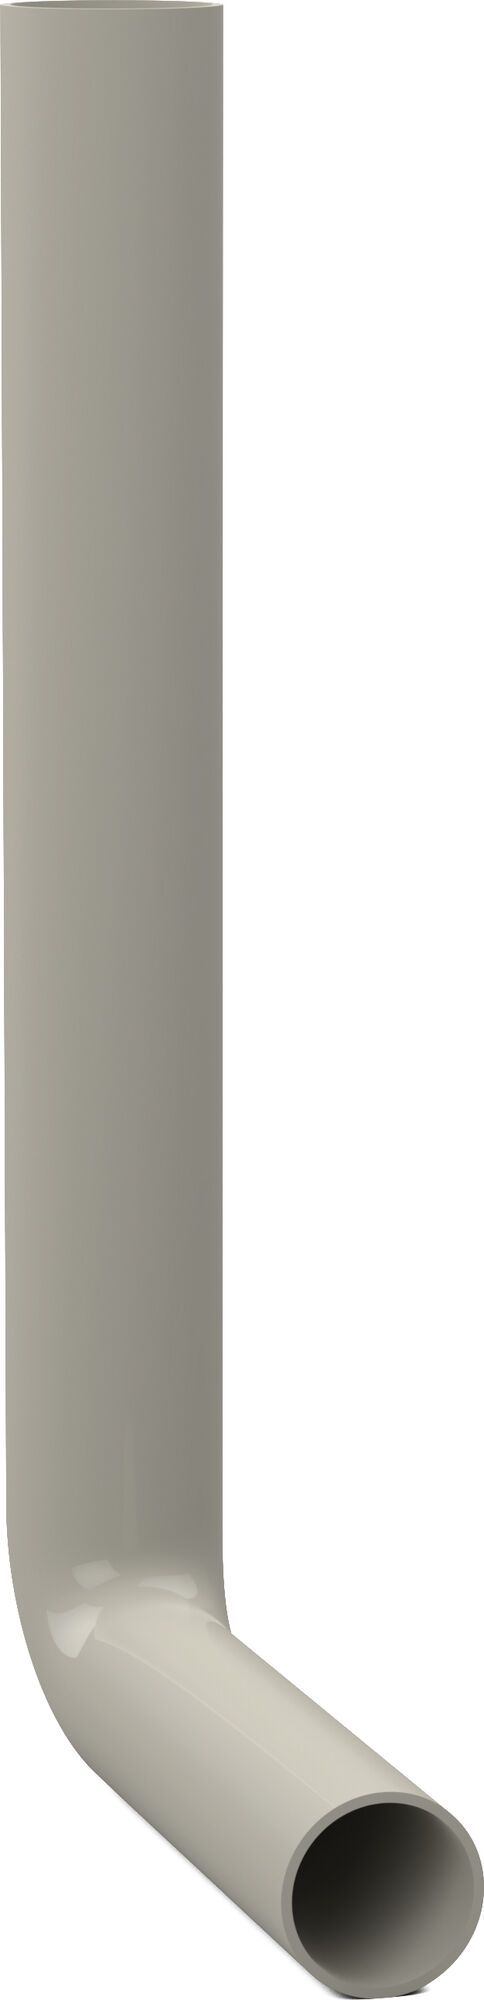 COT 380 x 210 mm, pergamon